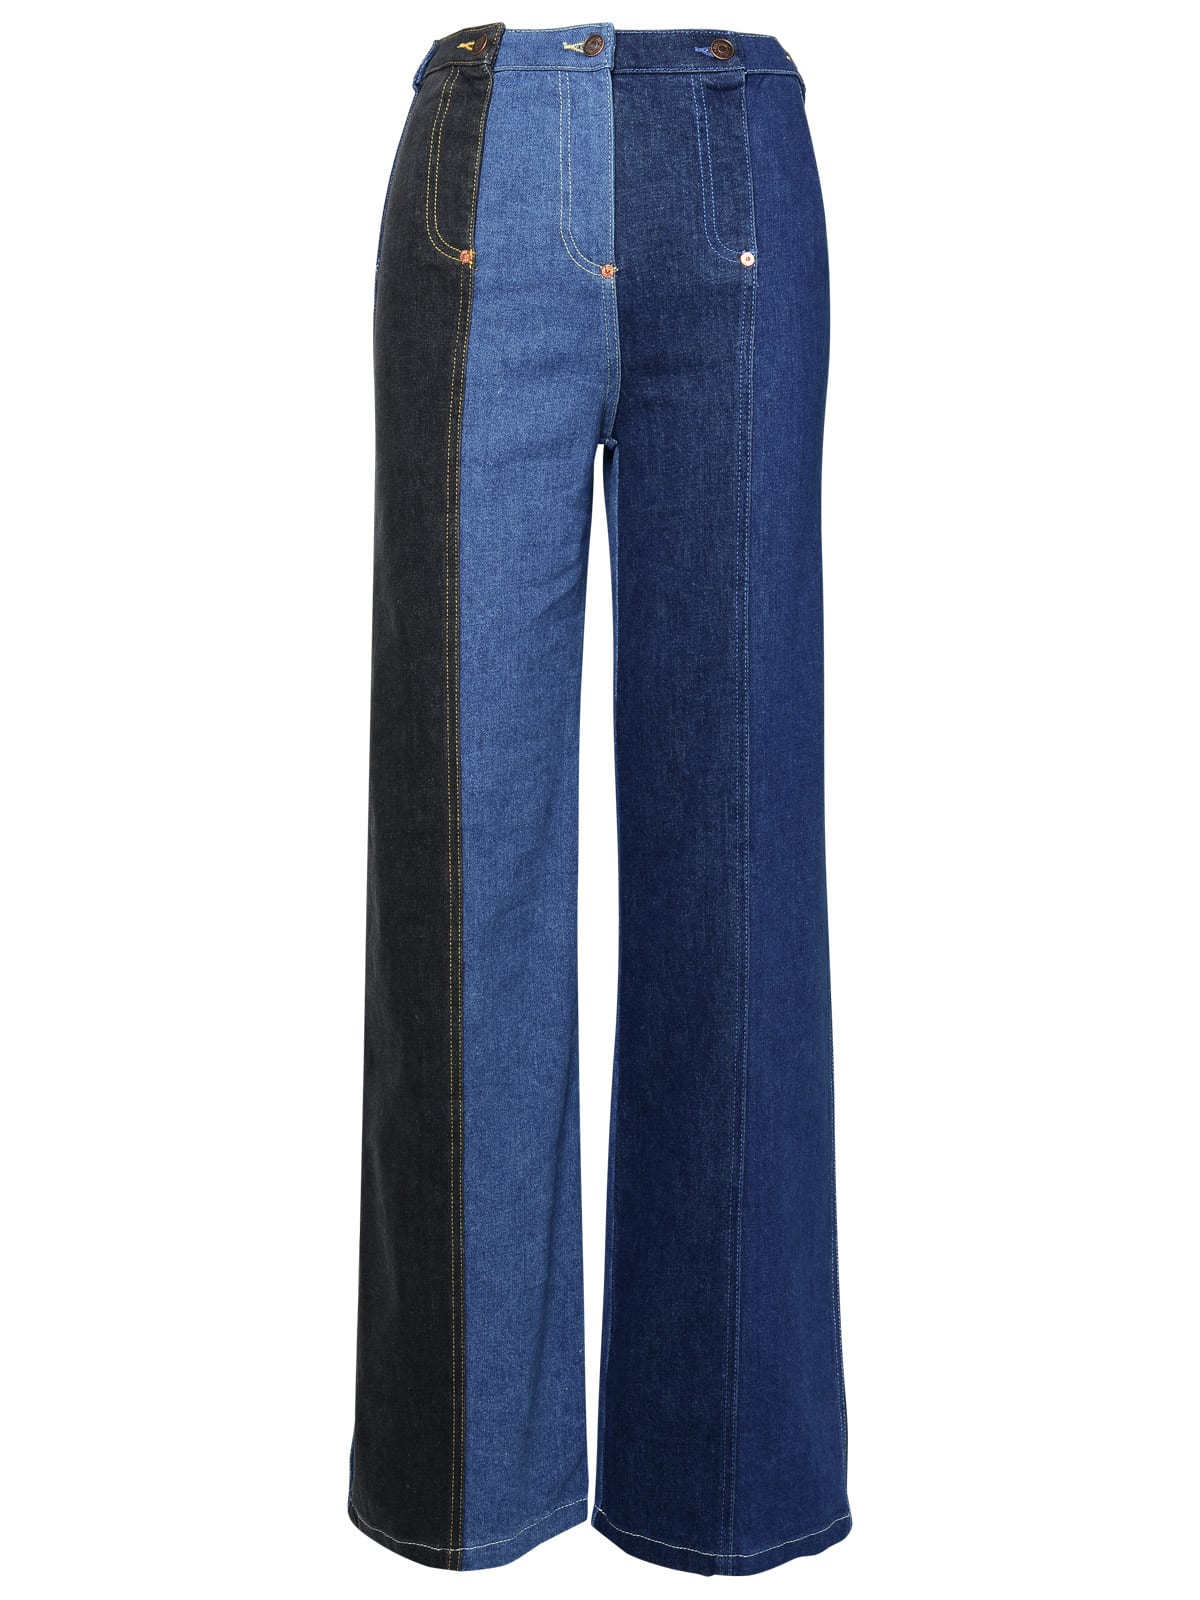 M05ch1n0 Jeans Blue Cotton Jeans In Denim